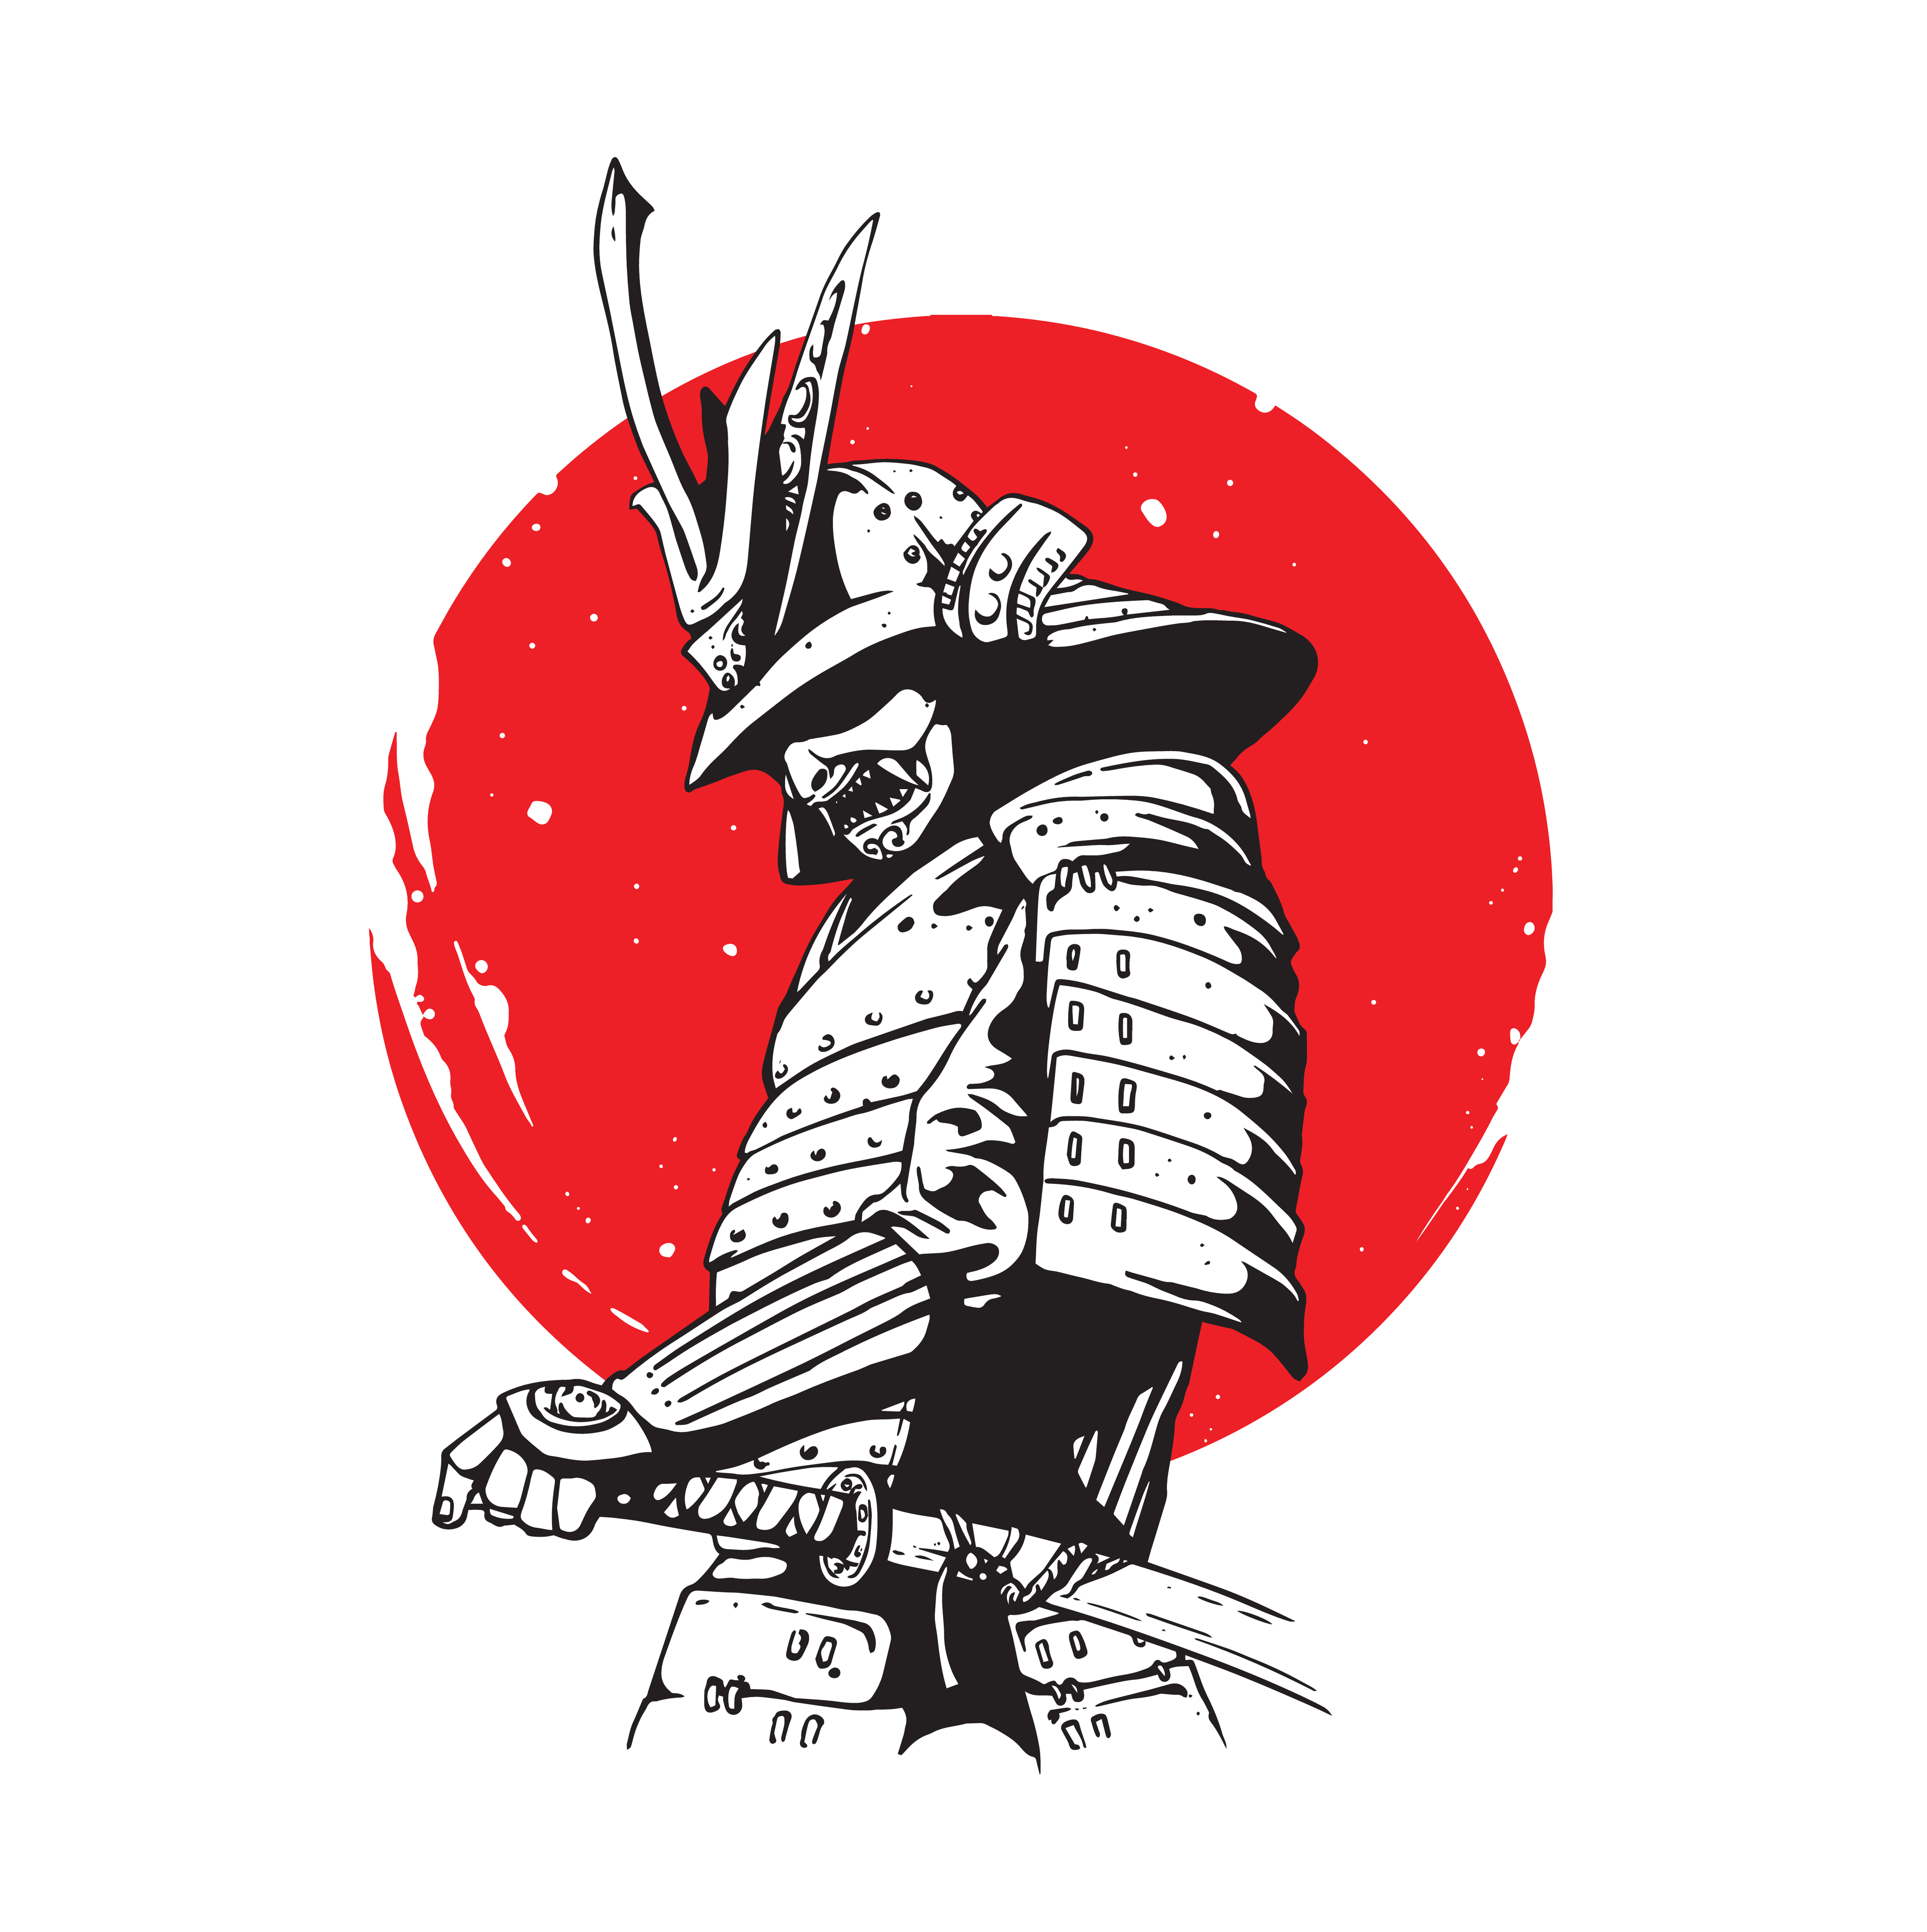 Samurai adhering to the Bushido Code as a way of being in the world.